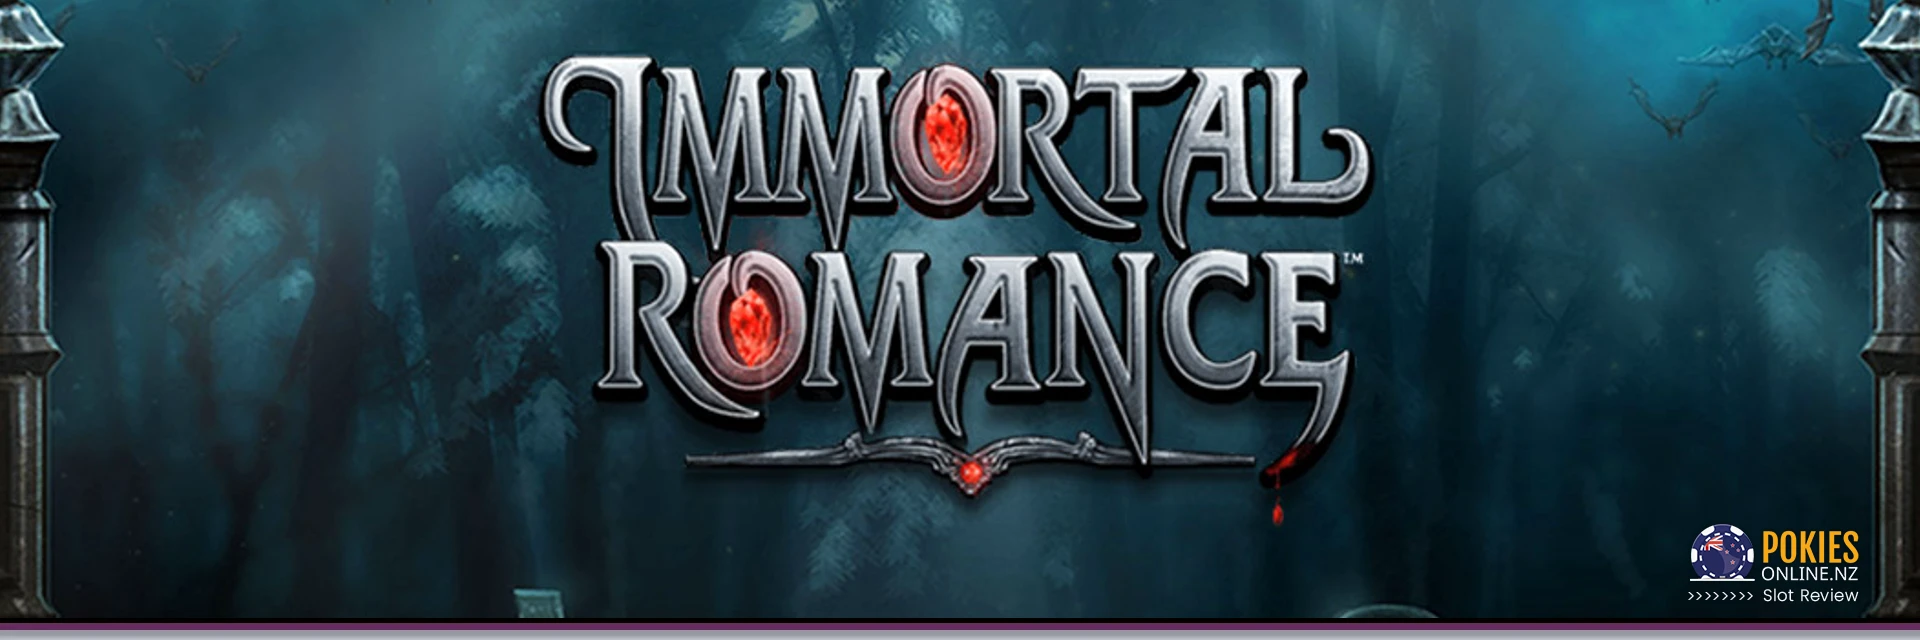 Immortal romance slot cover